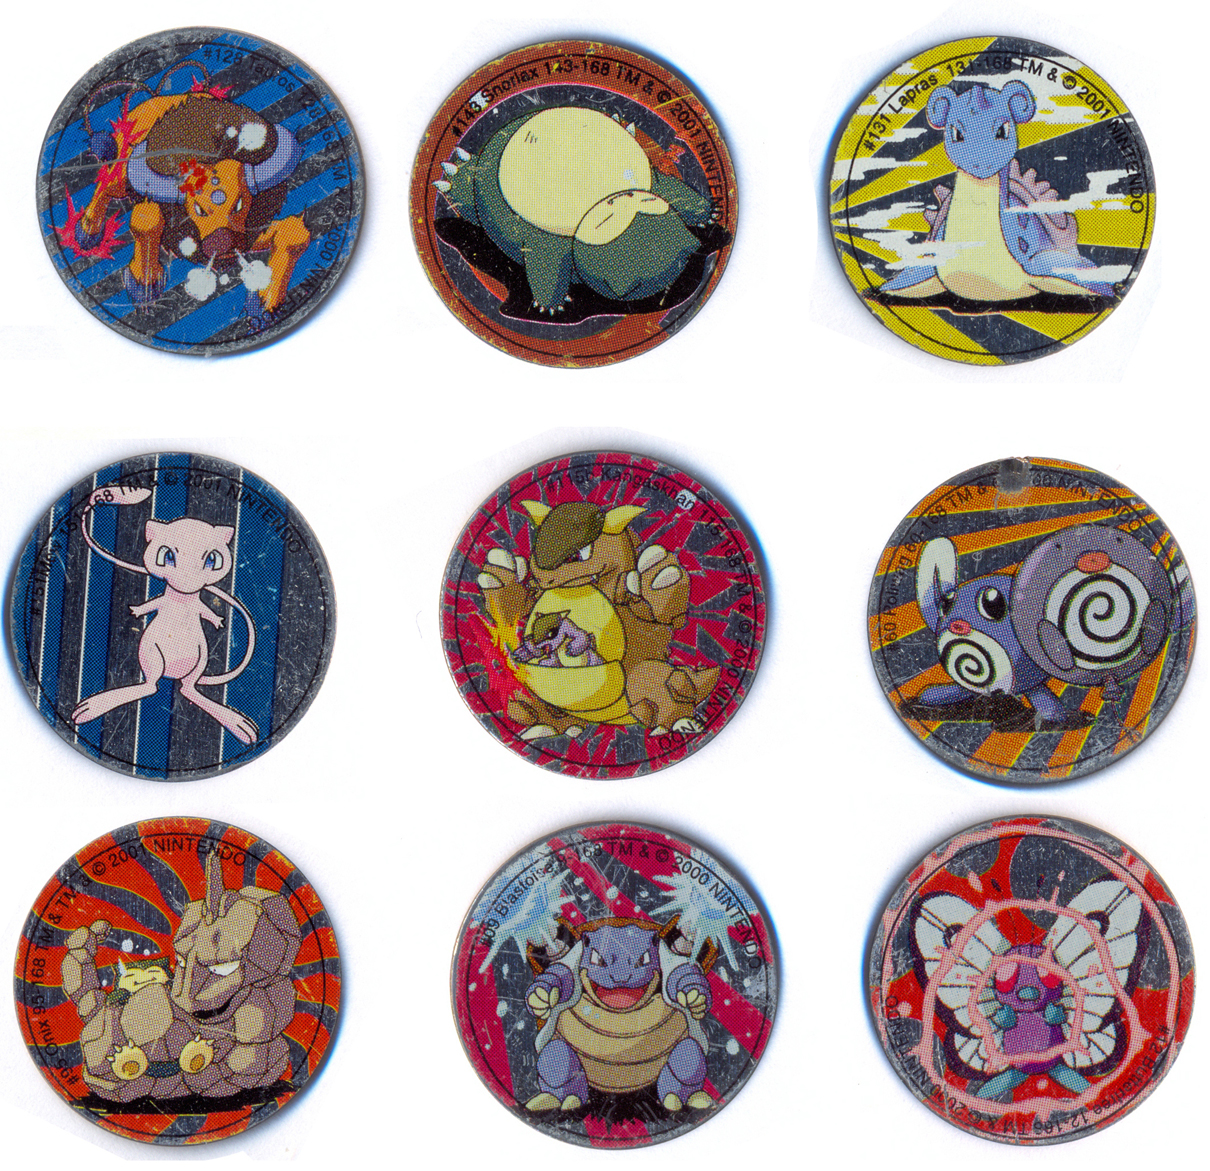 Pokémon - One Piece Stampede Badge , HD Wallpaper & Backgrounds